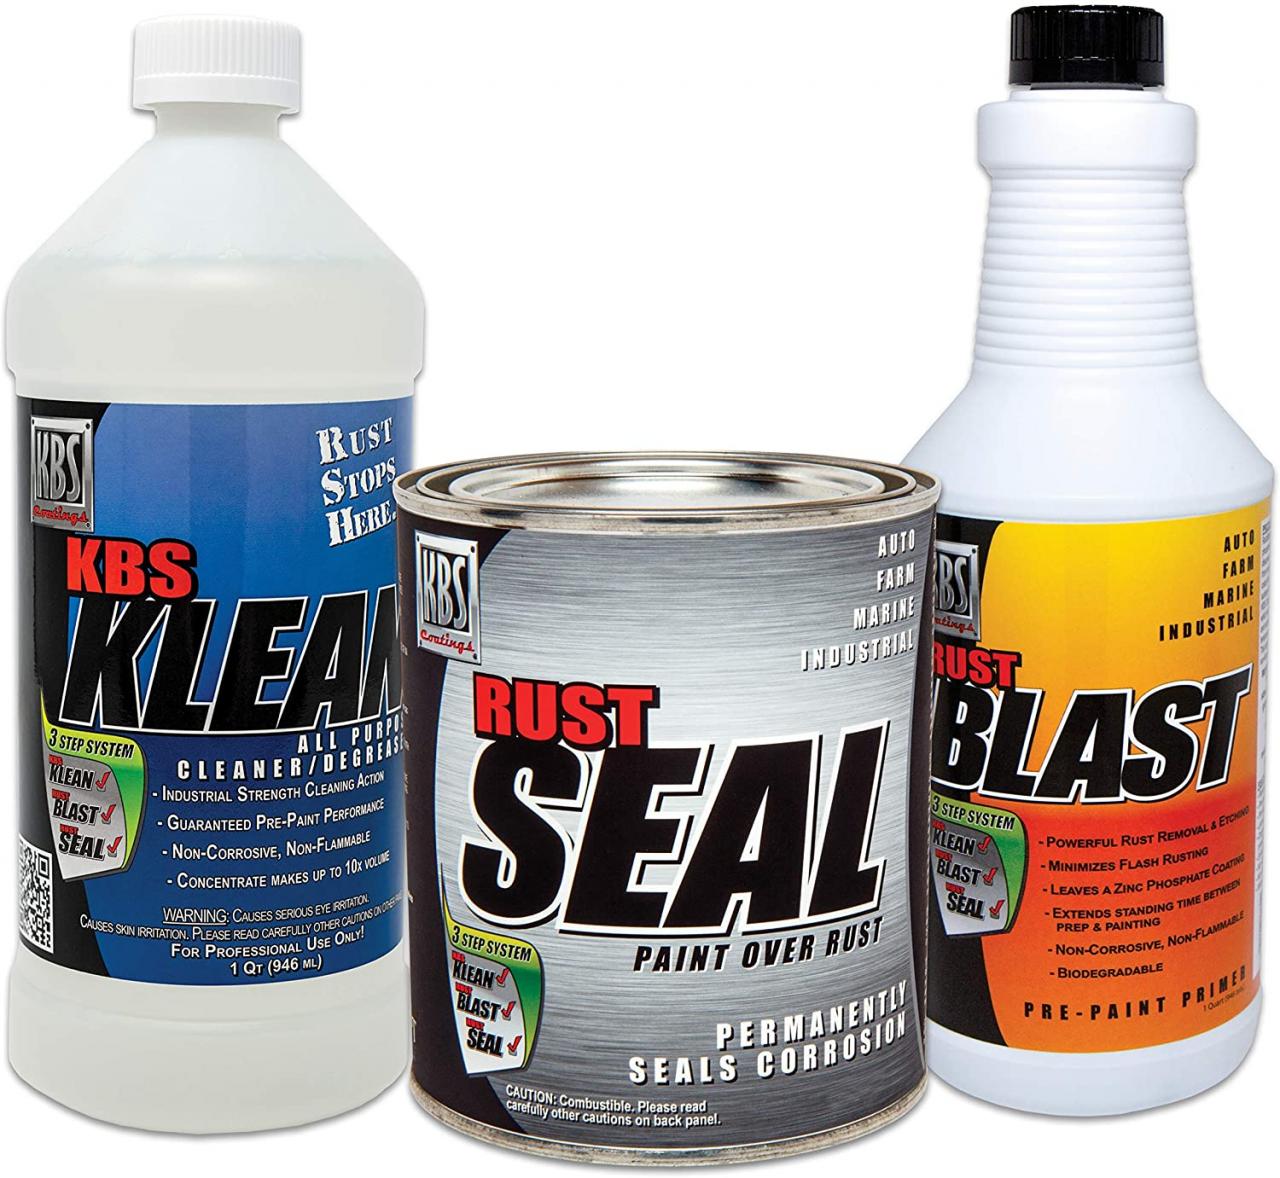 KBS RustSeal GLOSS BLACK One 1 Litre Rust Seal Paint Rust Preventive Coating  - KBS Coatings